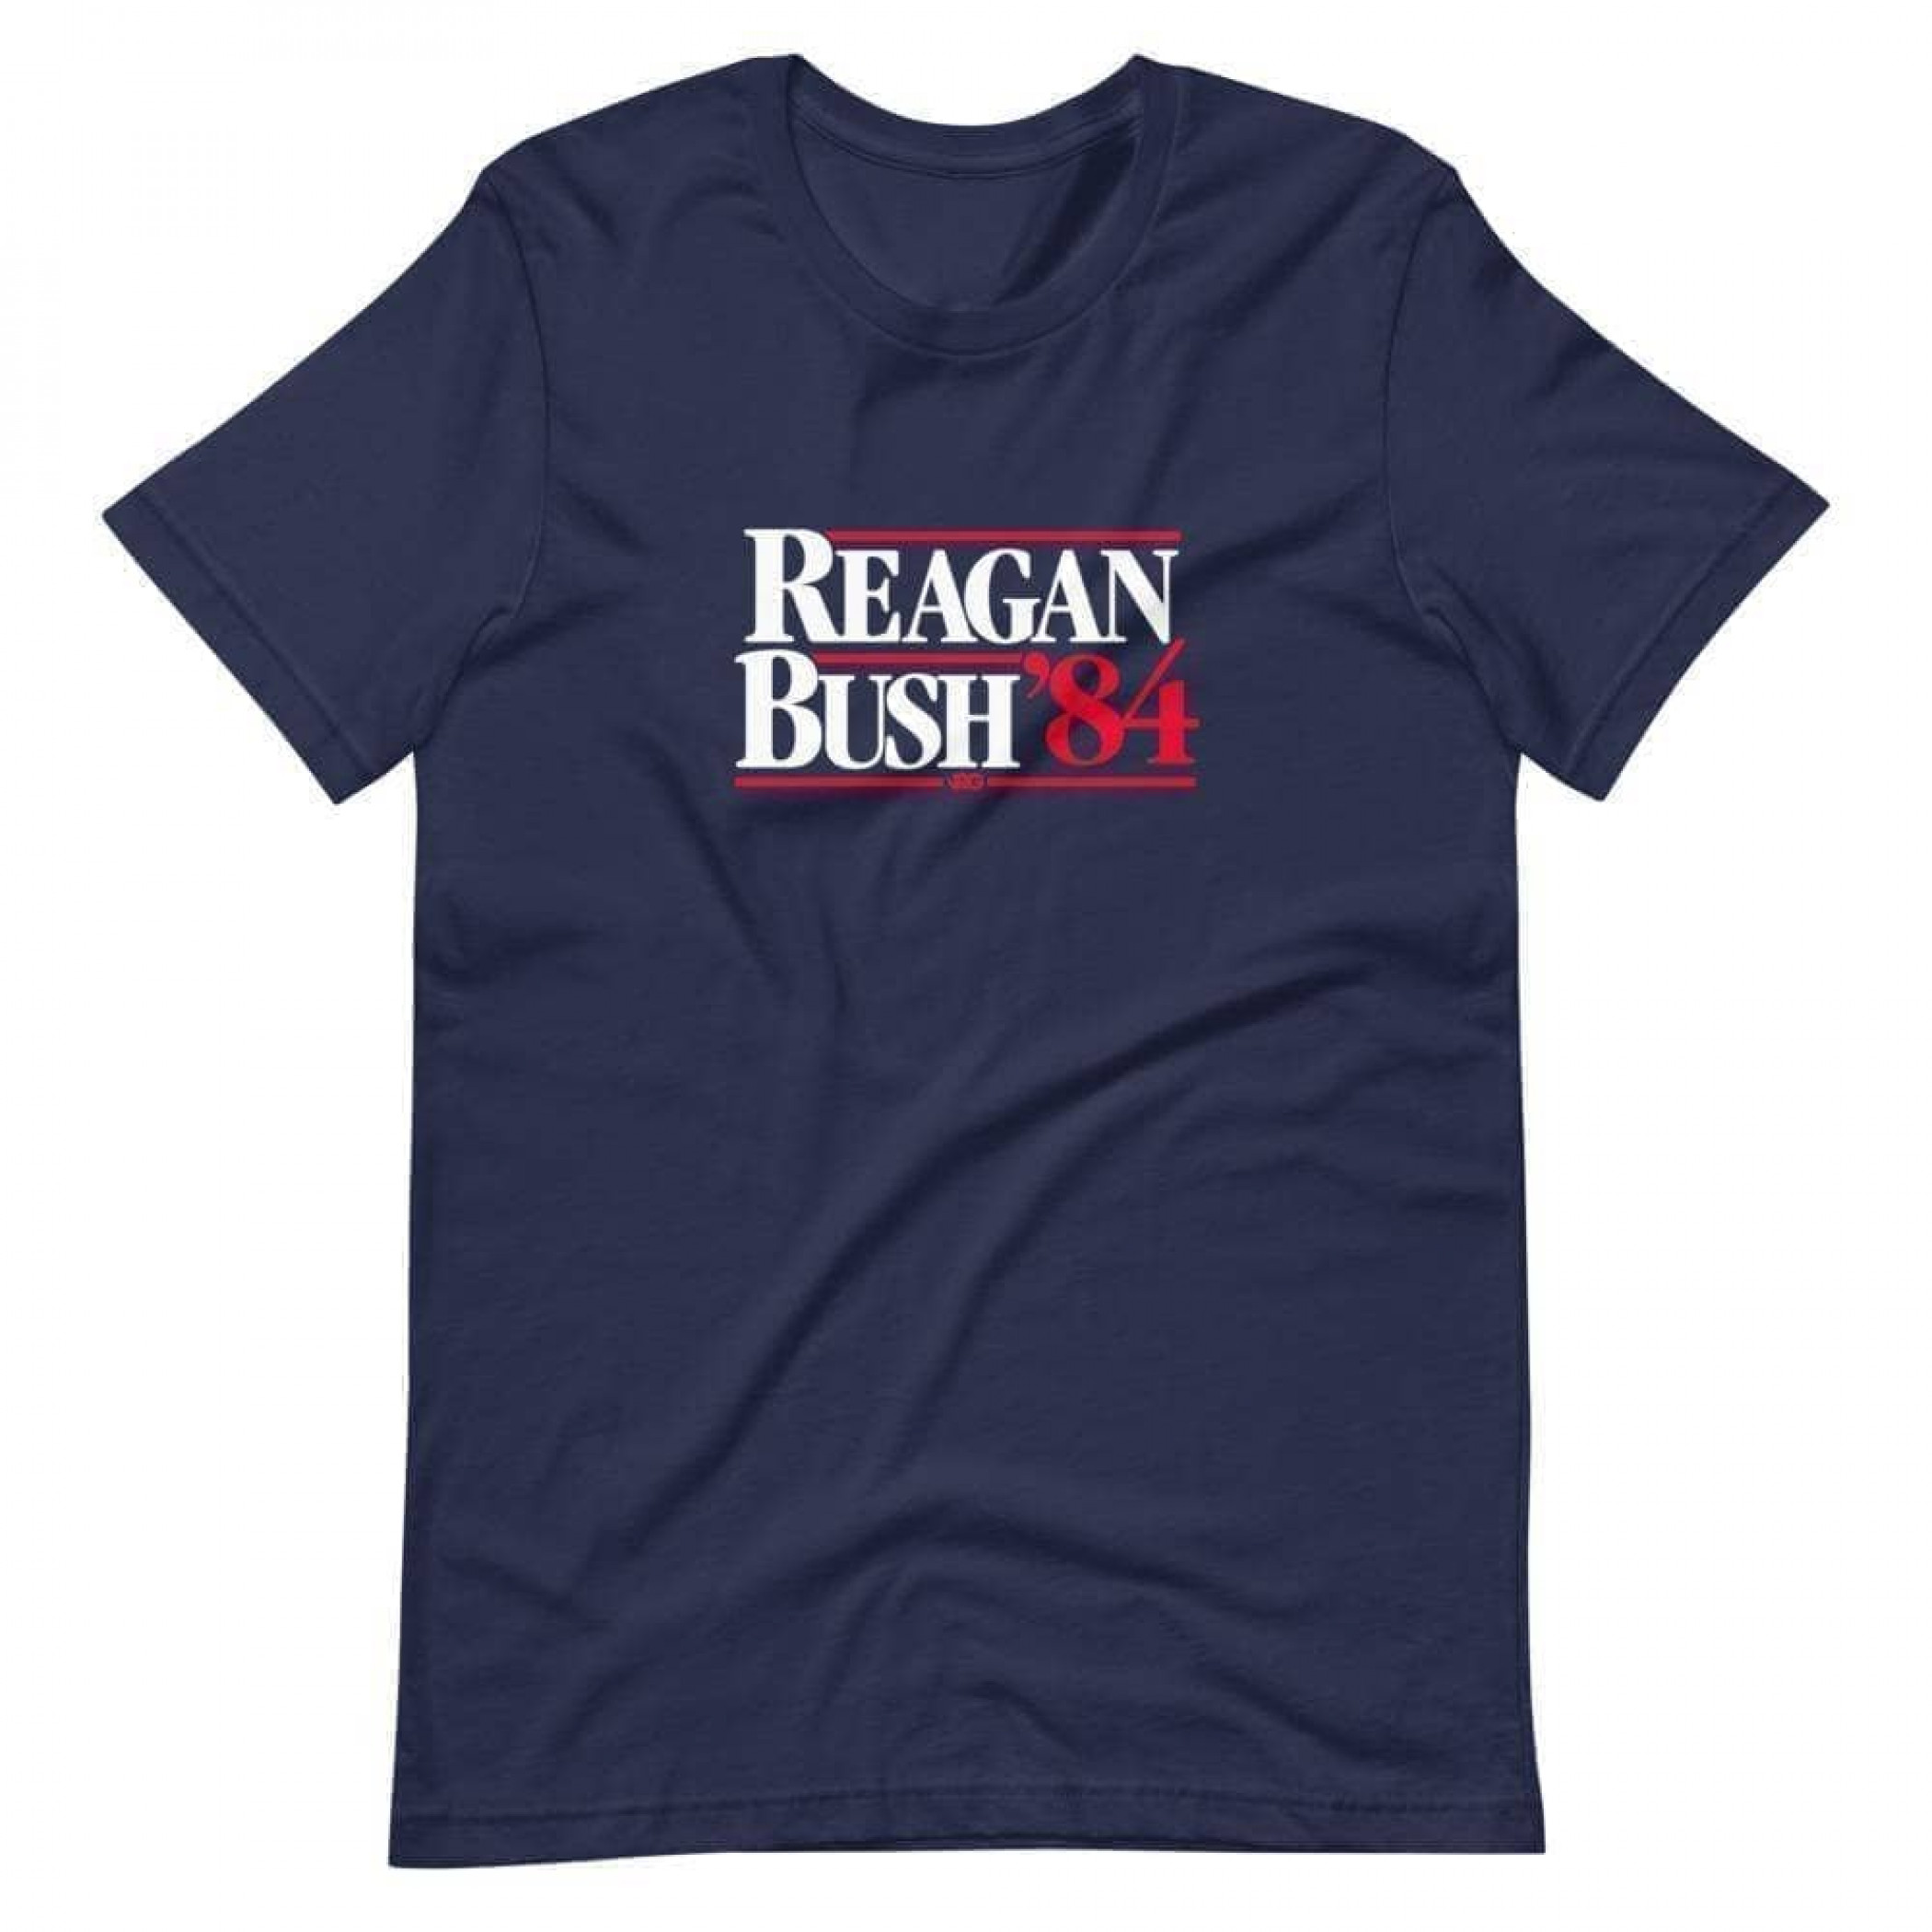 Reagan Bush '84 - Navy Tee